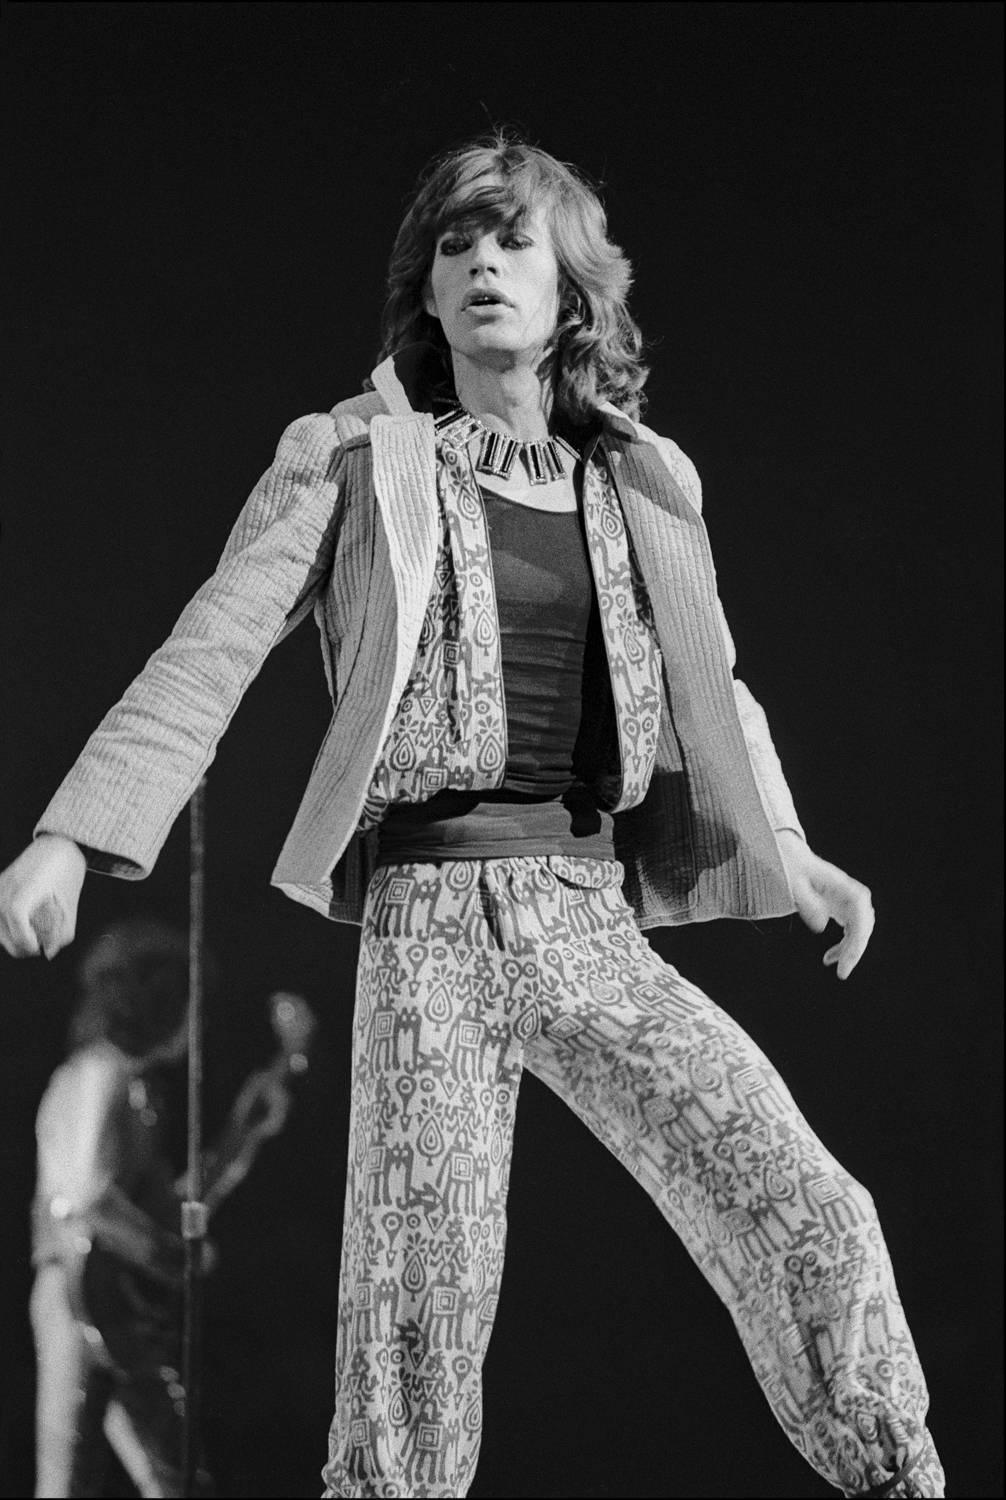 Black and White Photograph Allan Tannenbaum - Mick Jagger - Les performances